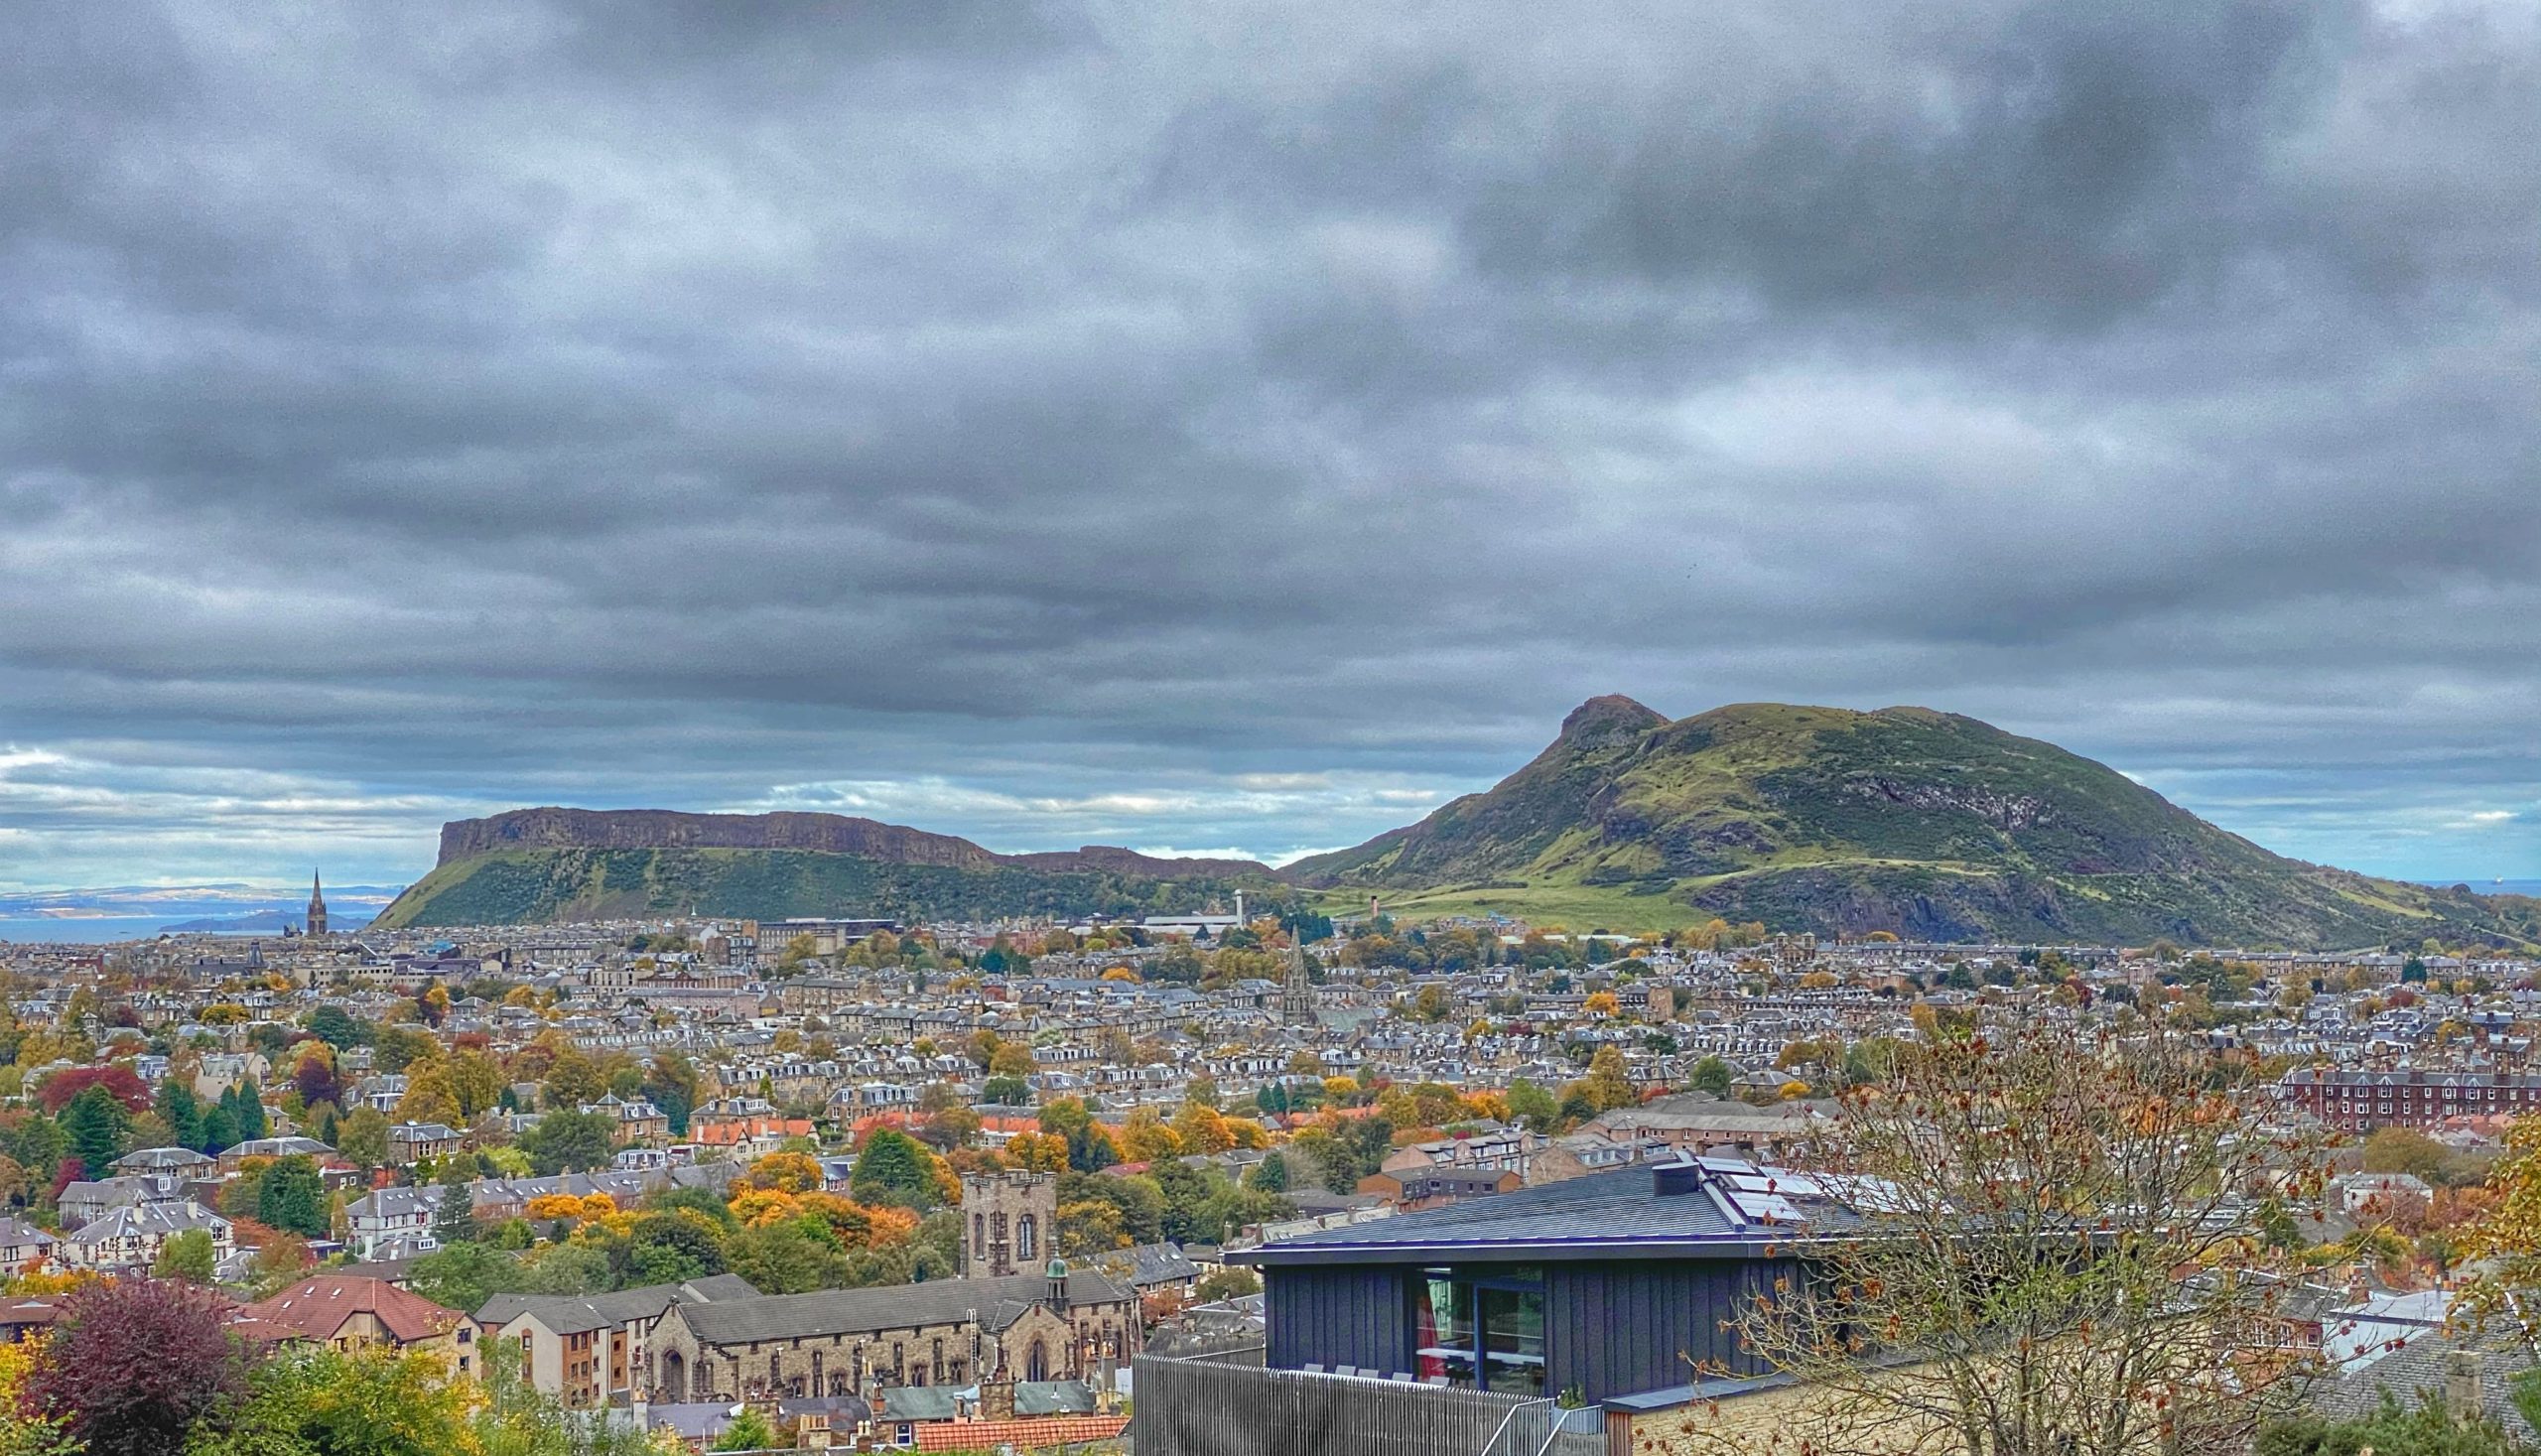 12000 airbnbs in Edinburgh. Fact or Fiction